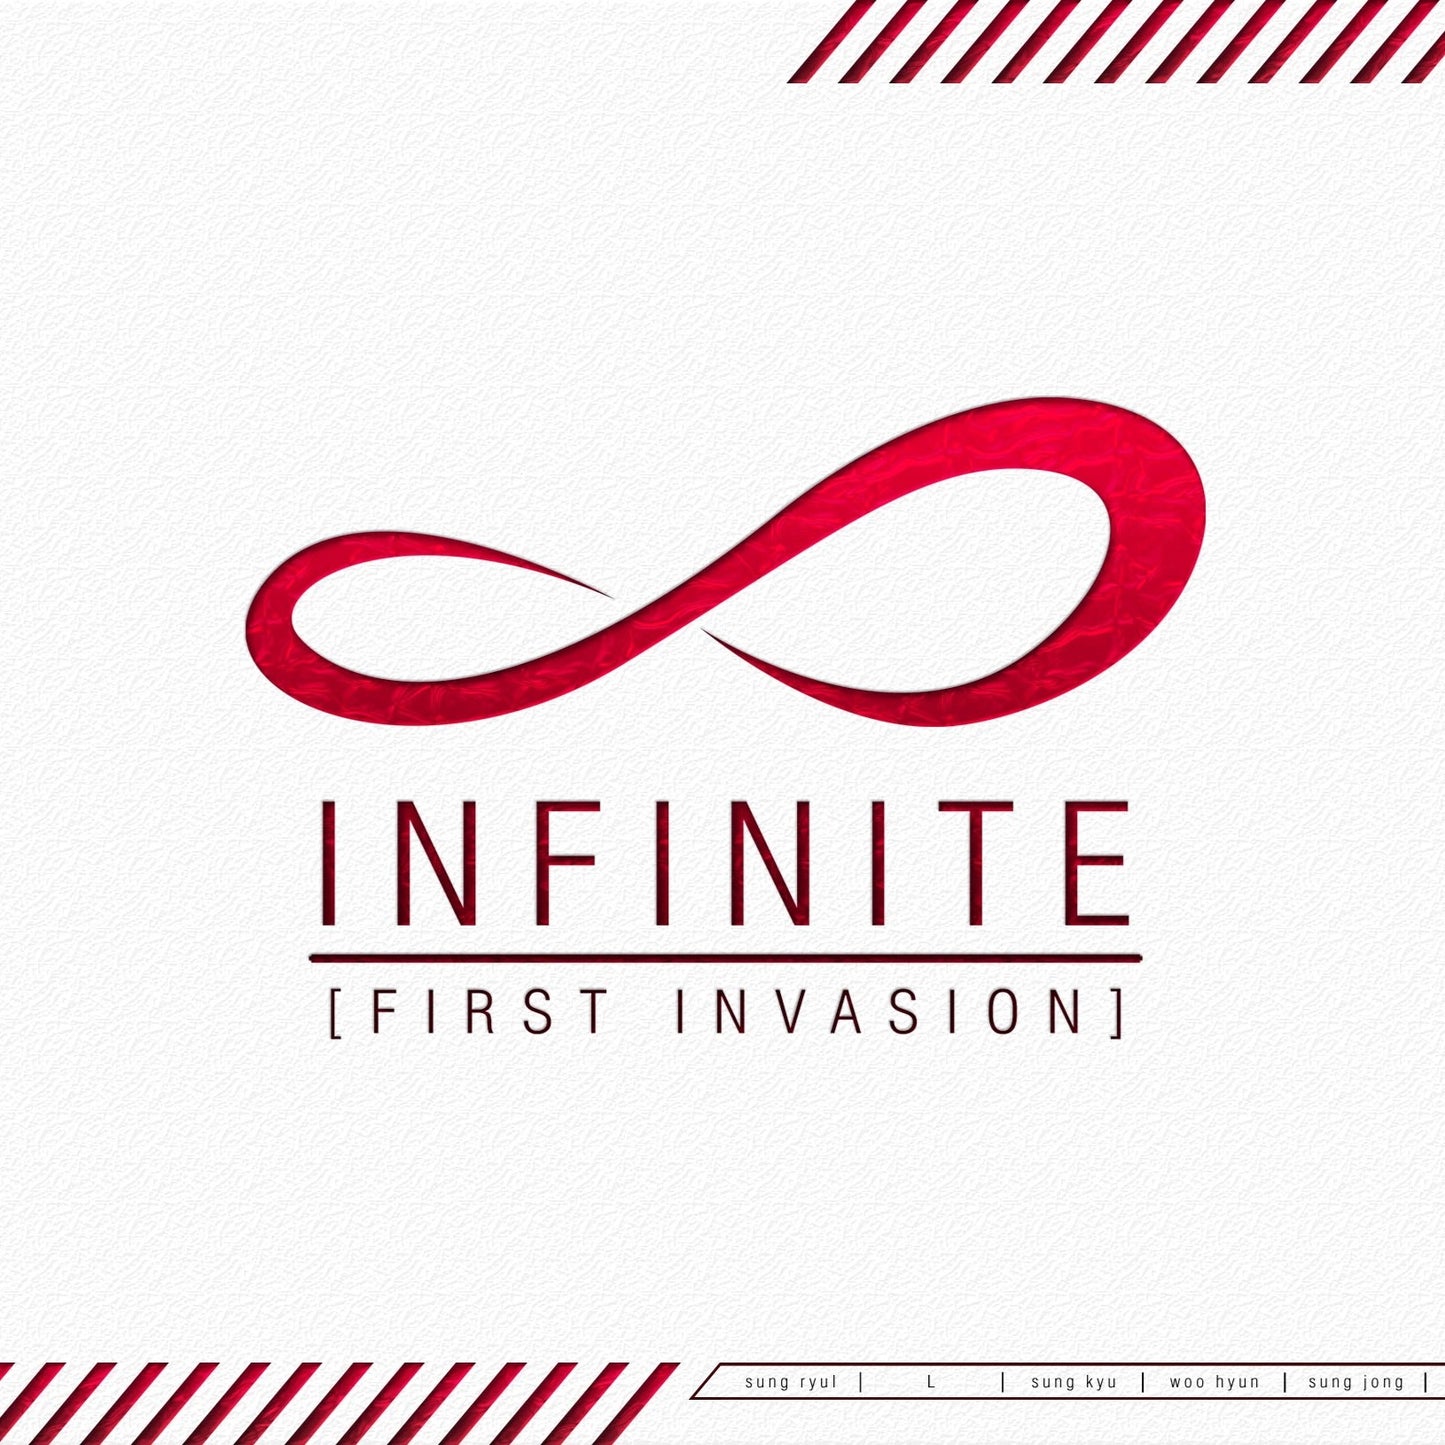 Infinite - First Invasion